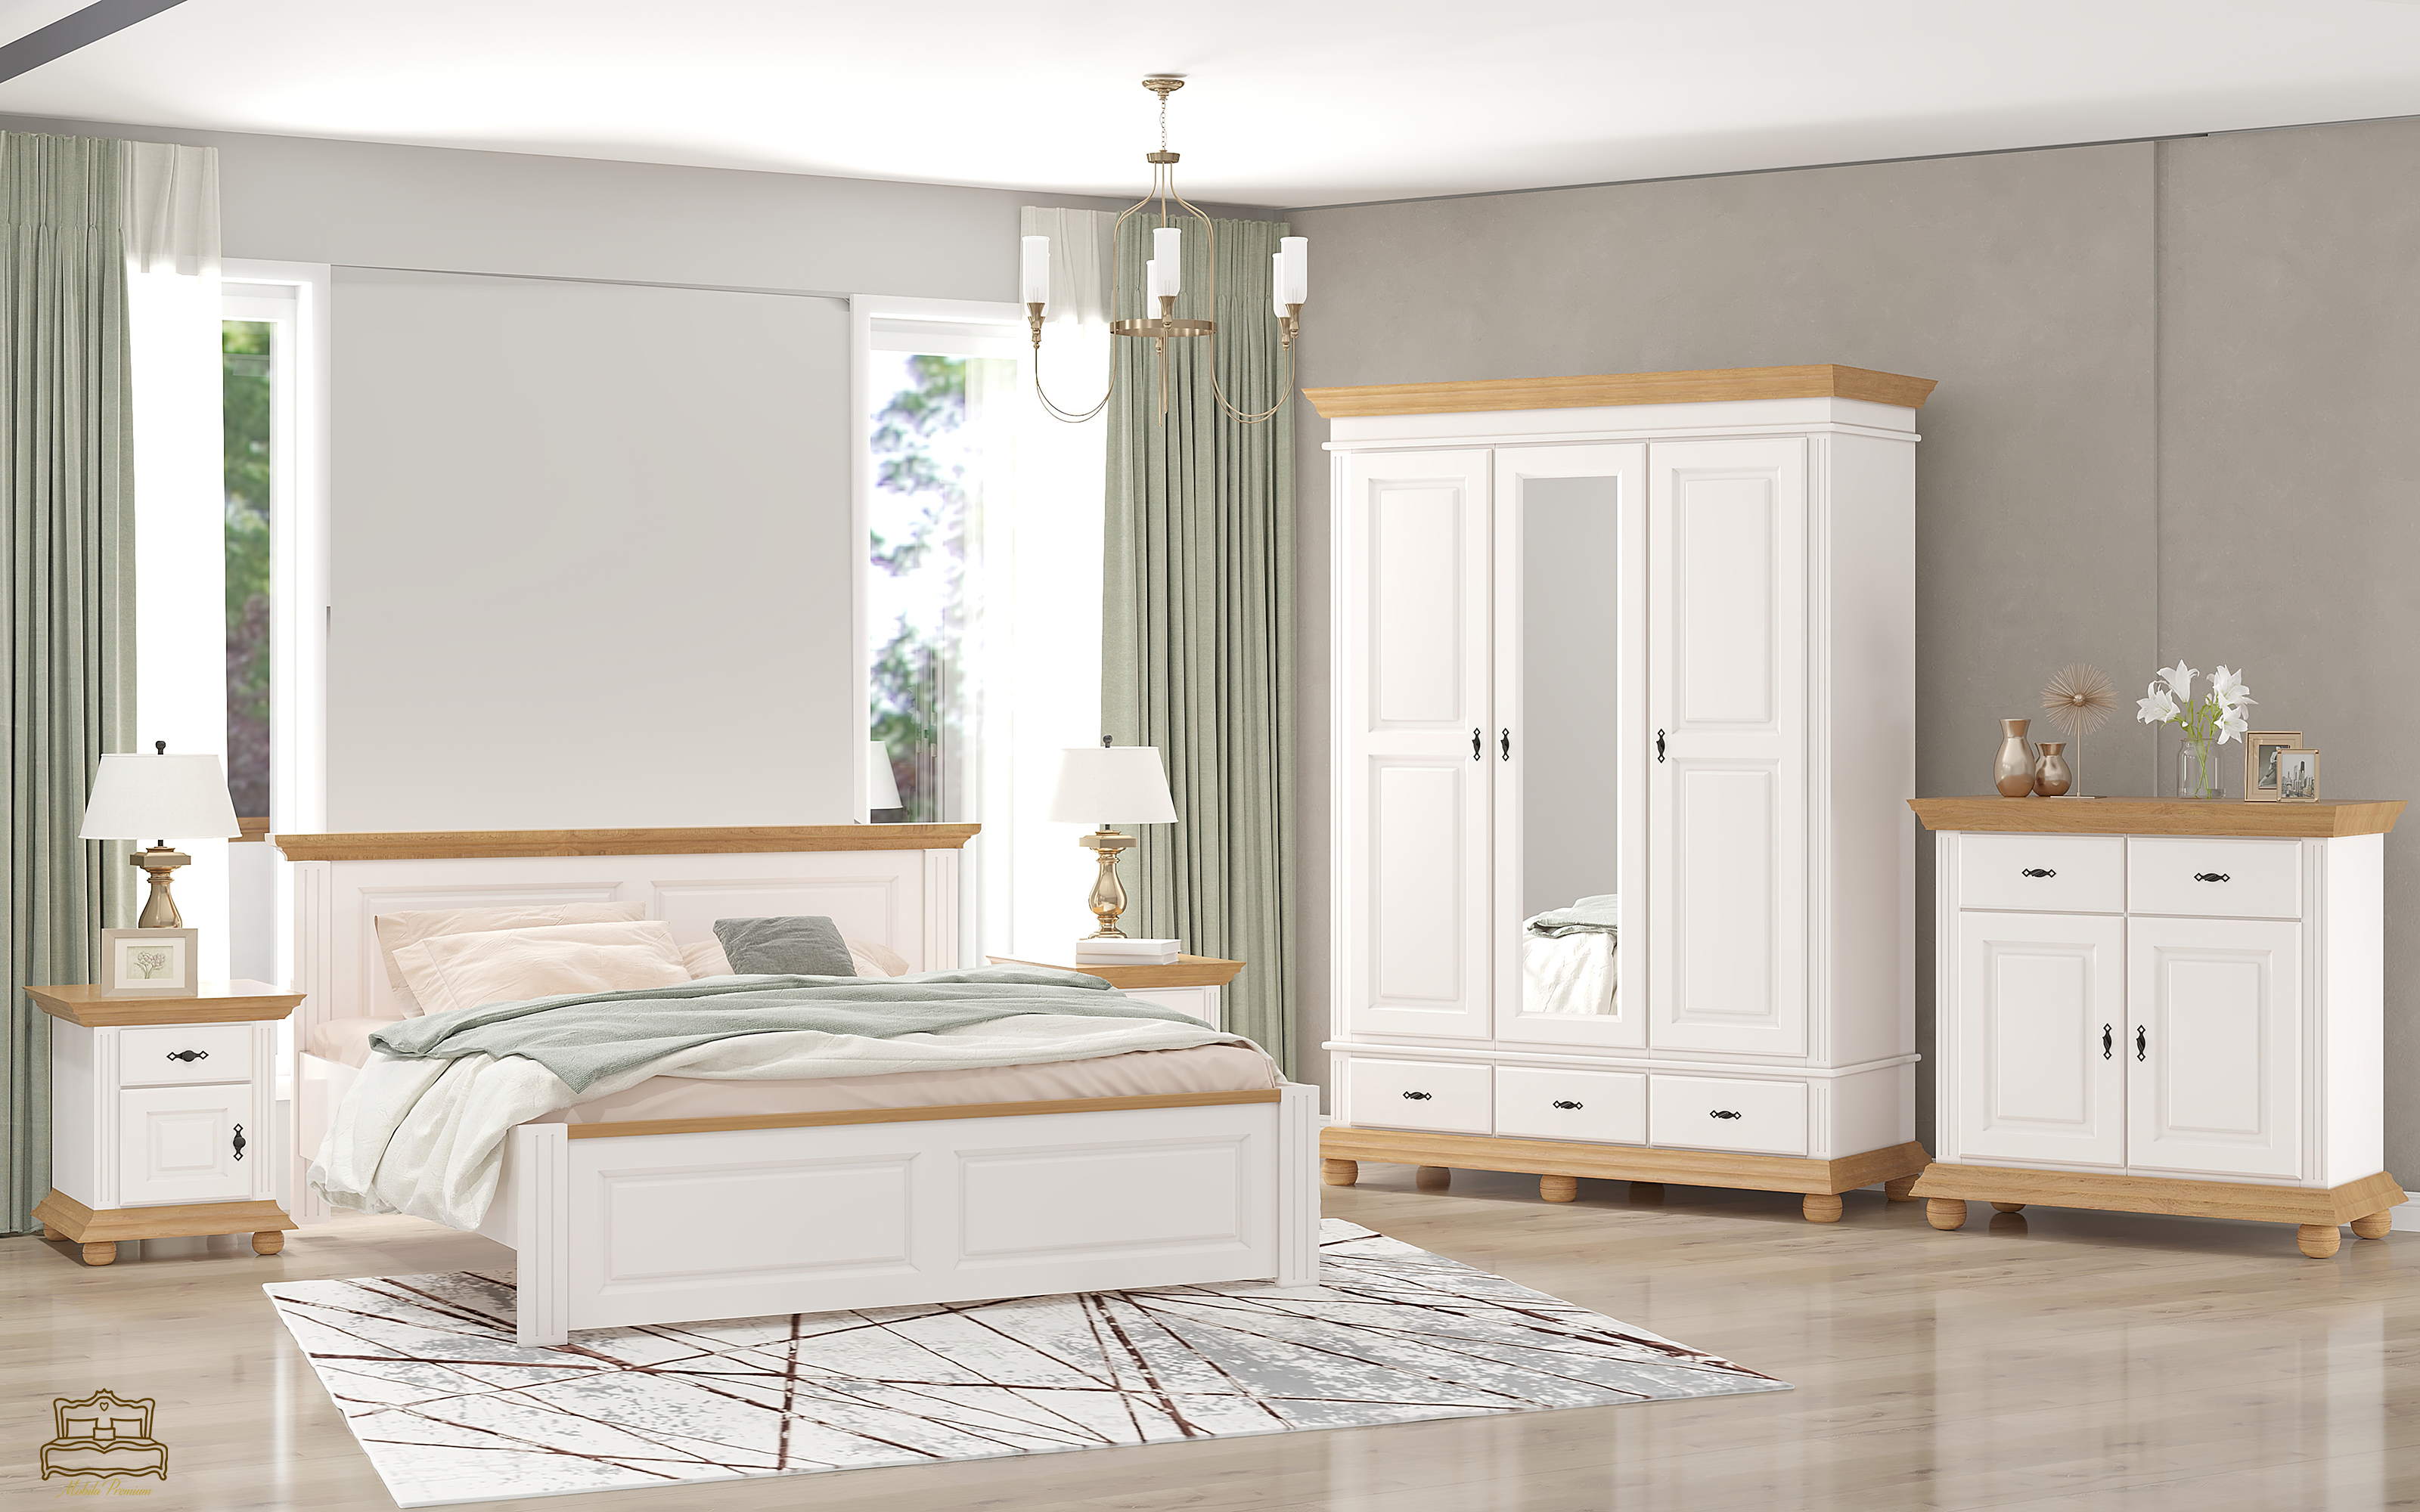 Dormitor Select 2 lemn masiv, alb/natur